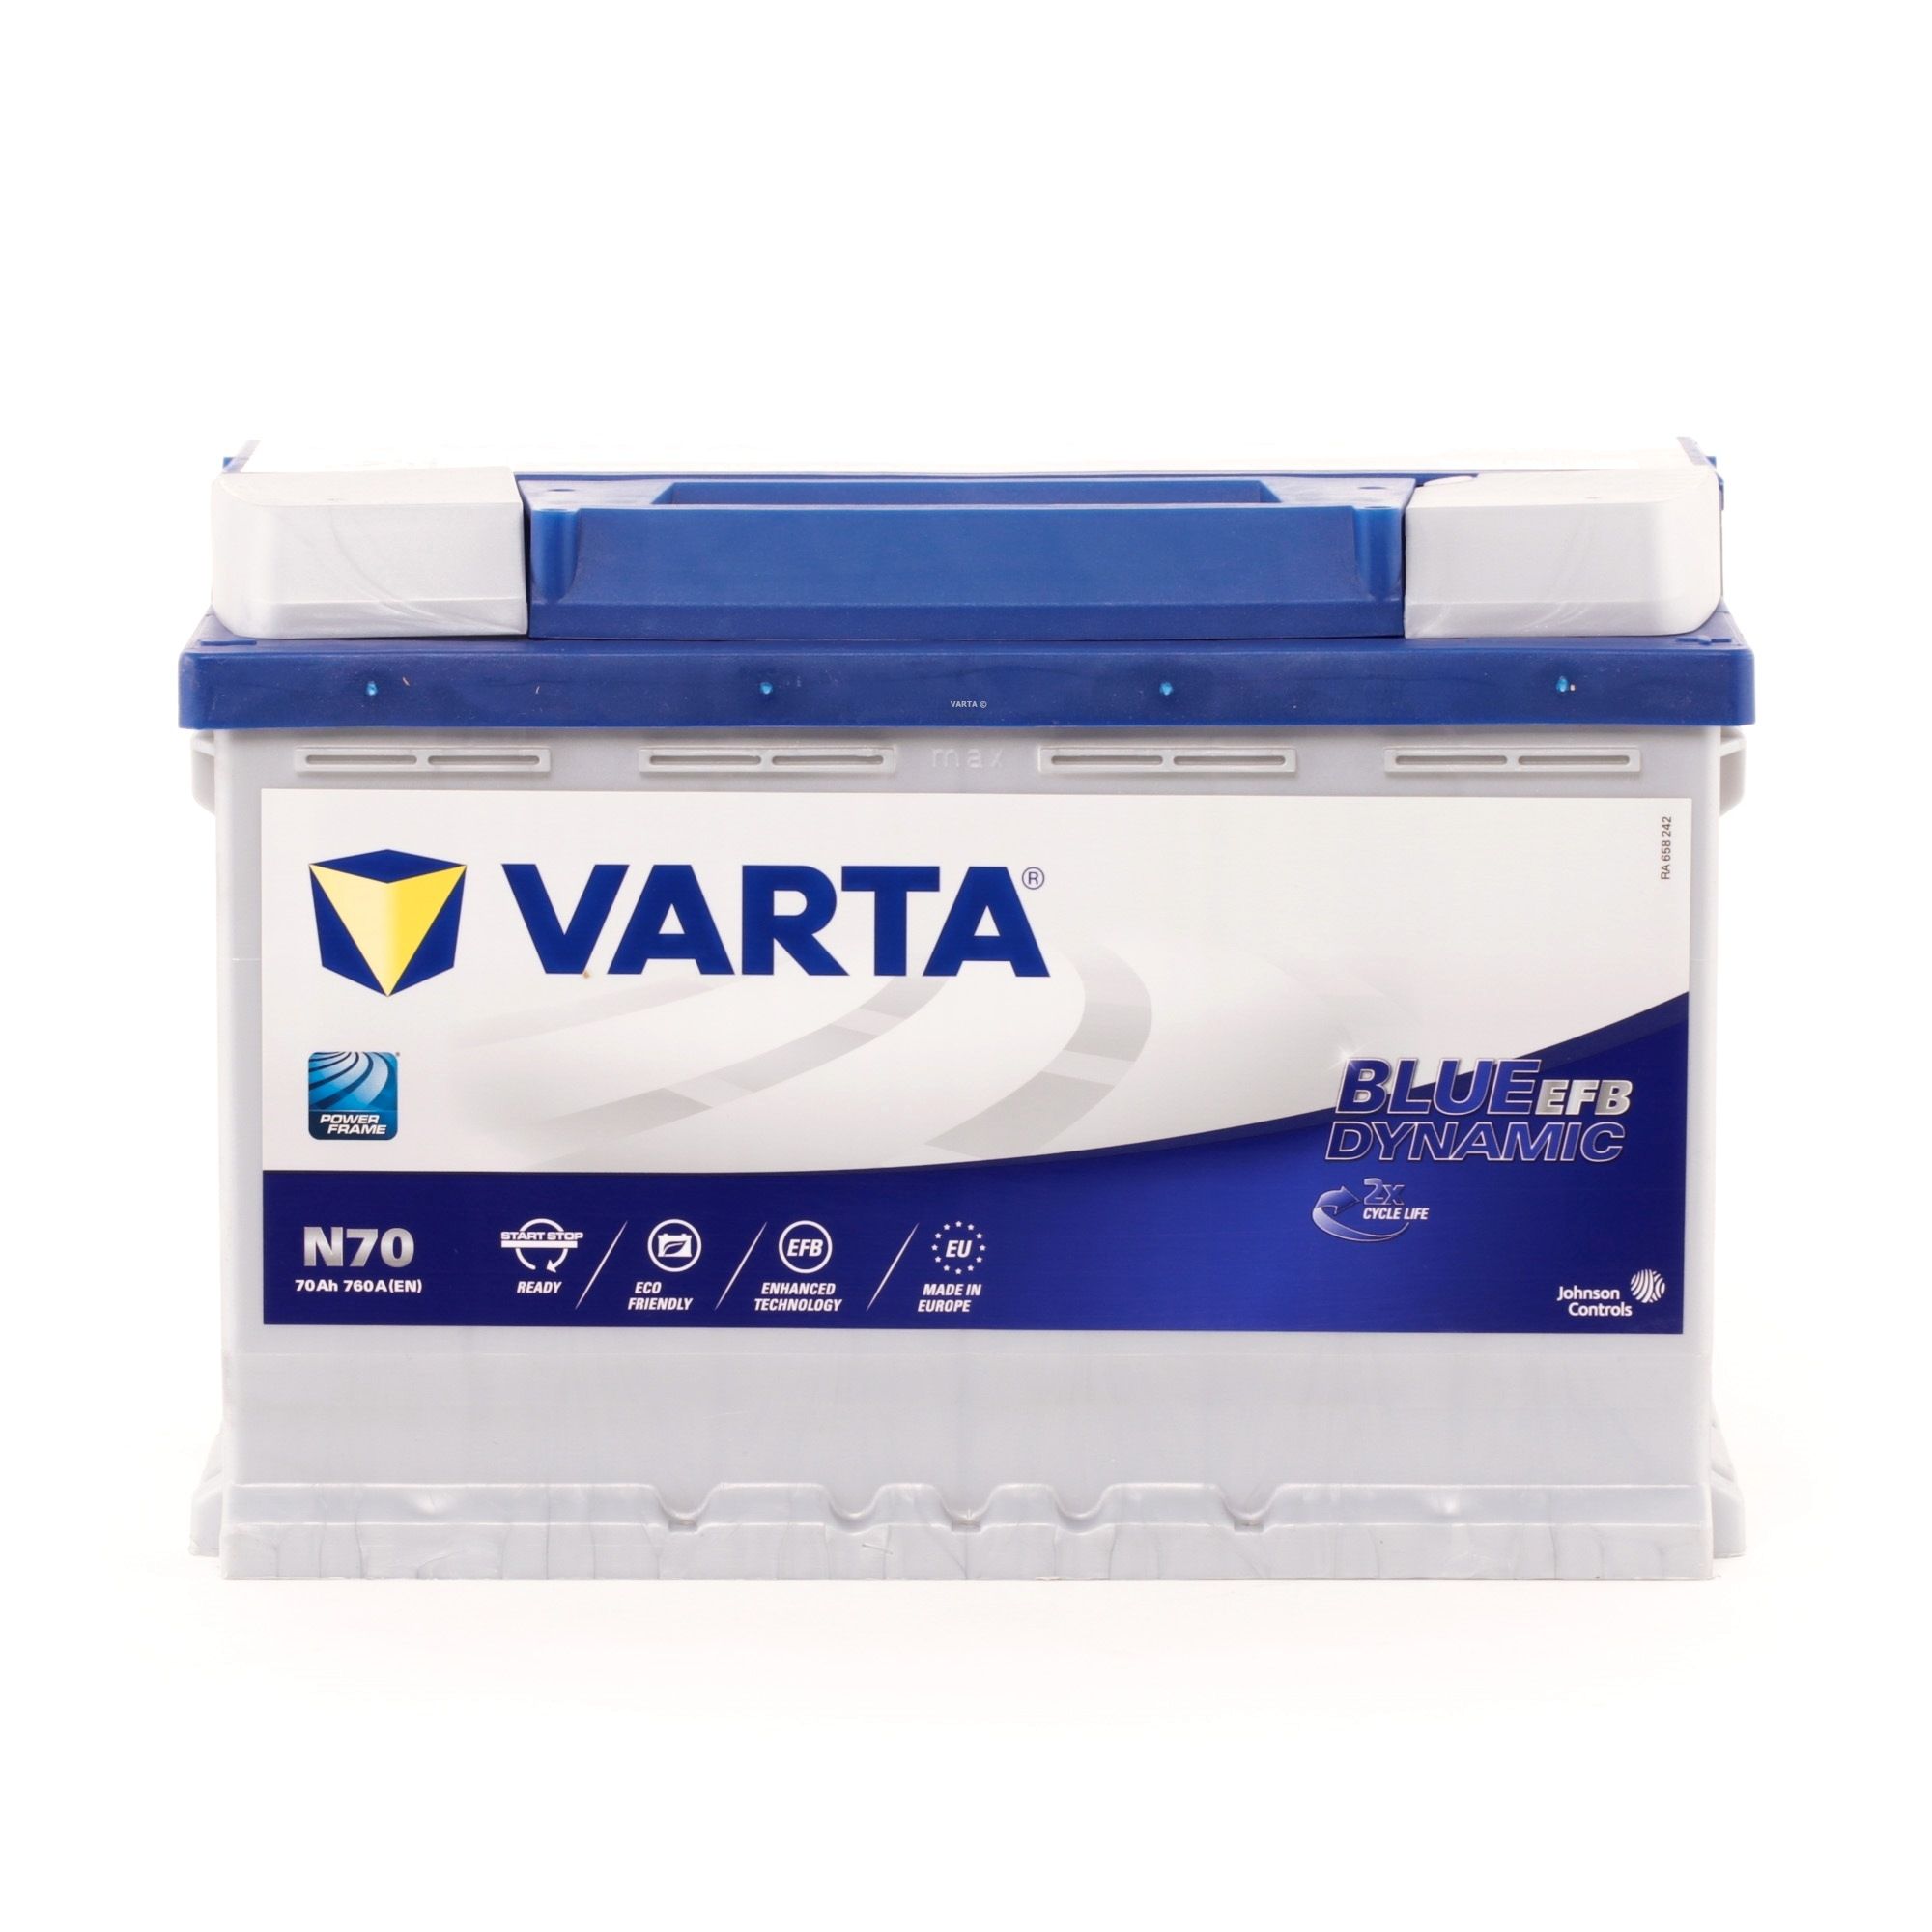 VARTA BLUE dynamic 570500076D842 Bilbatteri 12V 70Ah 760A B13 EFB-batteri